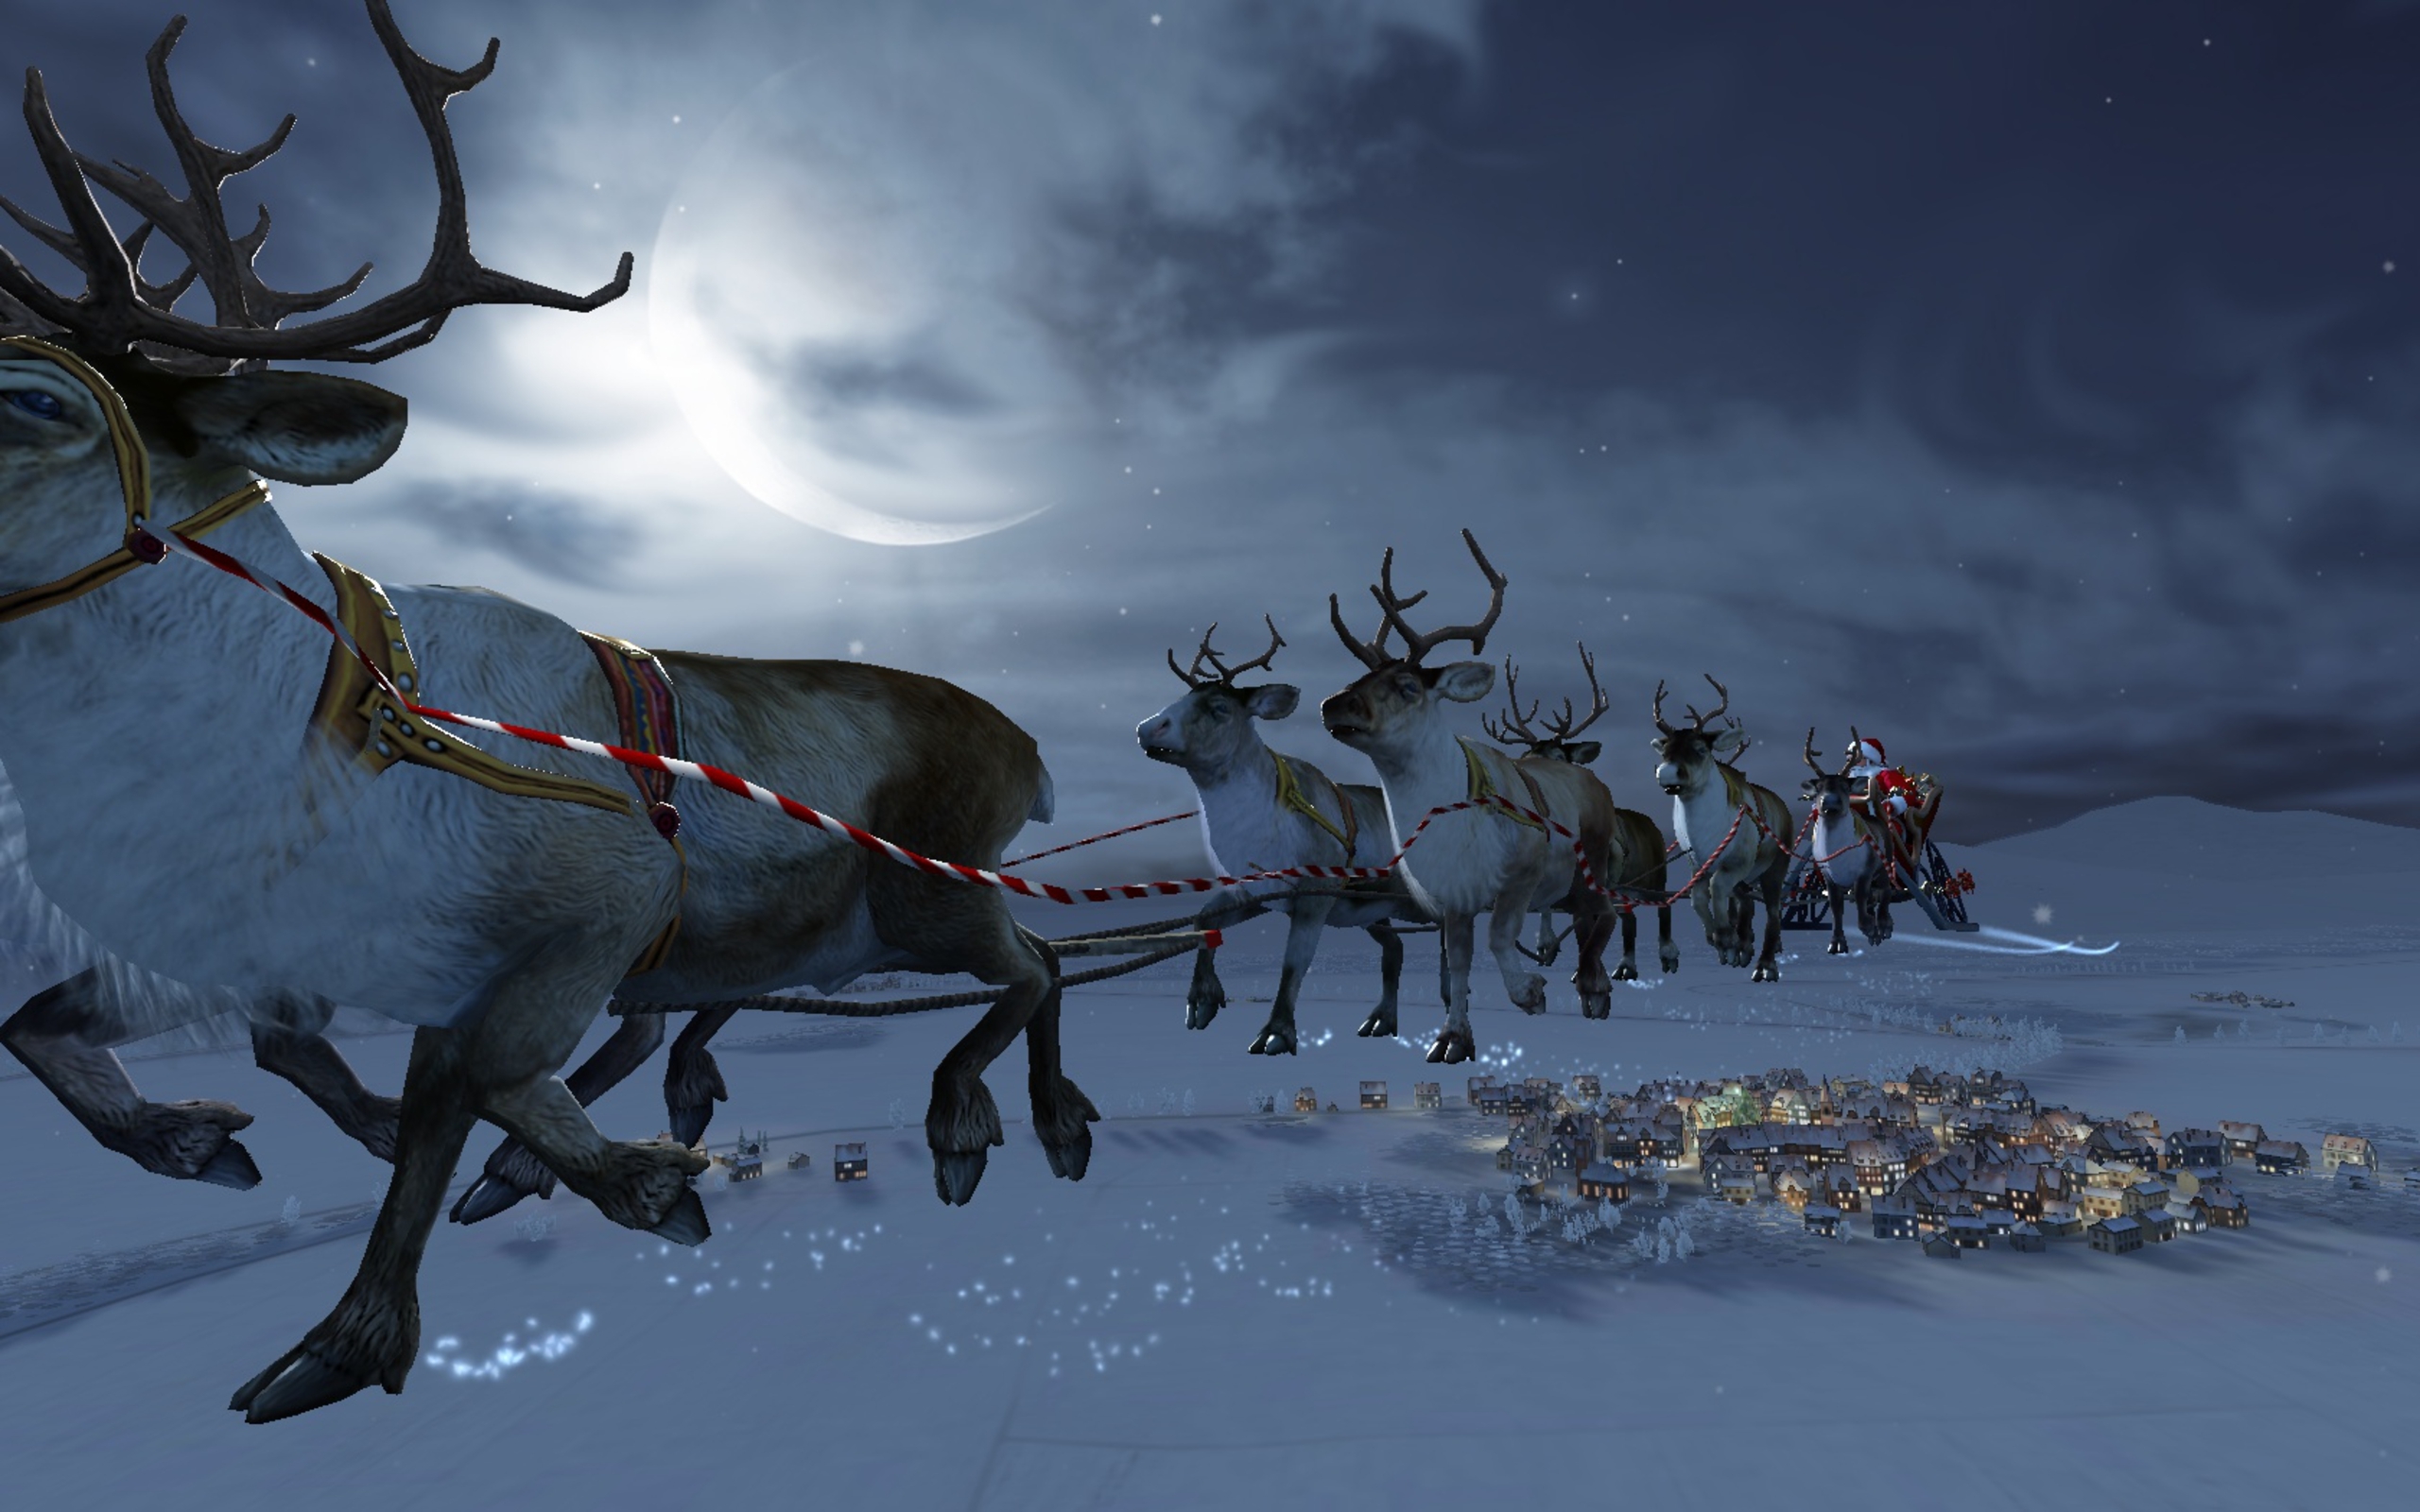 Snow Santa Claus Reindeer Rudolph Wallpaper Photos Pictures